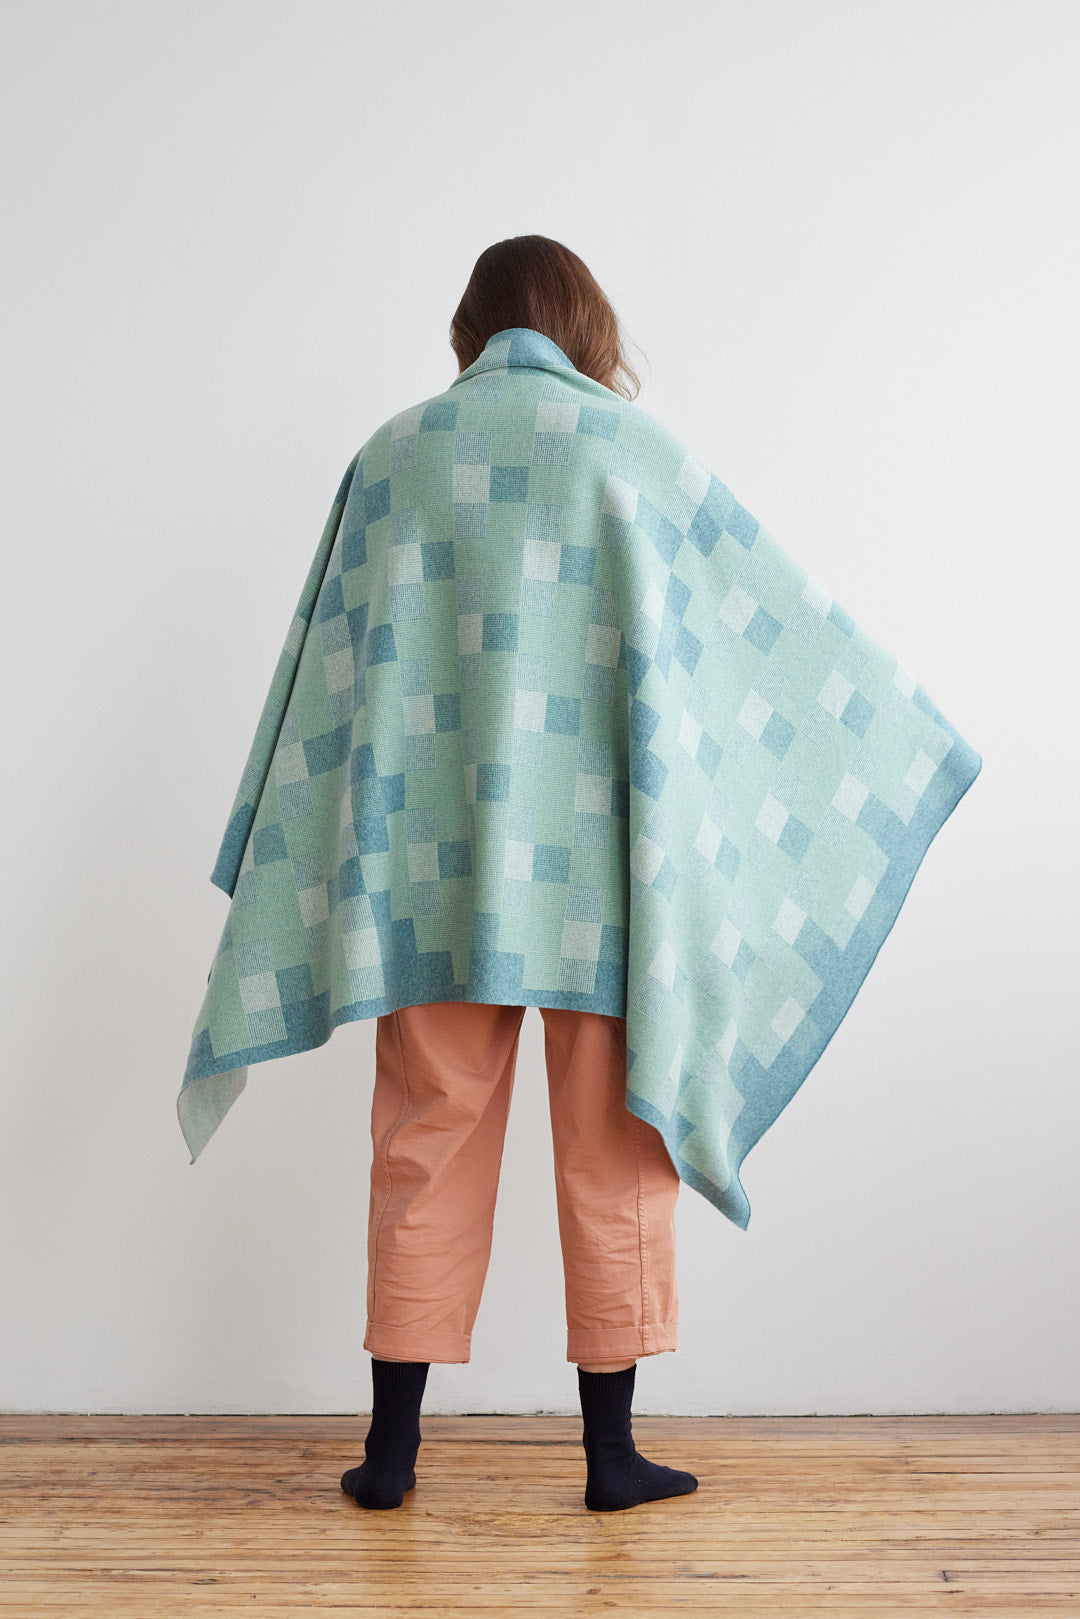 Blanket "Faro" - North Sea & Eggshell